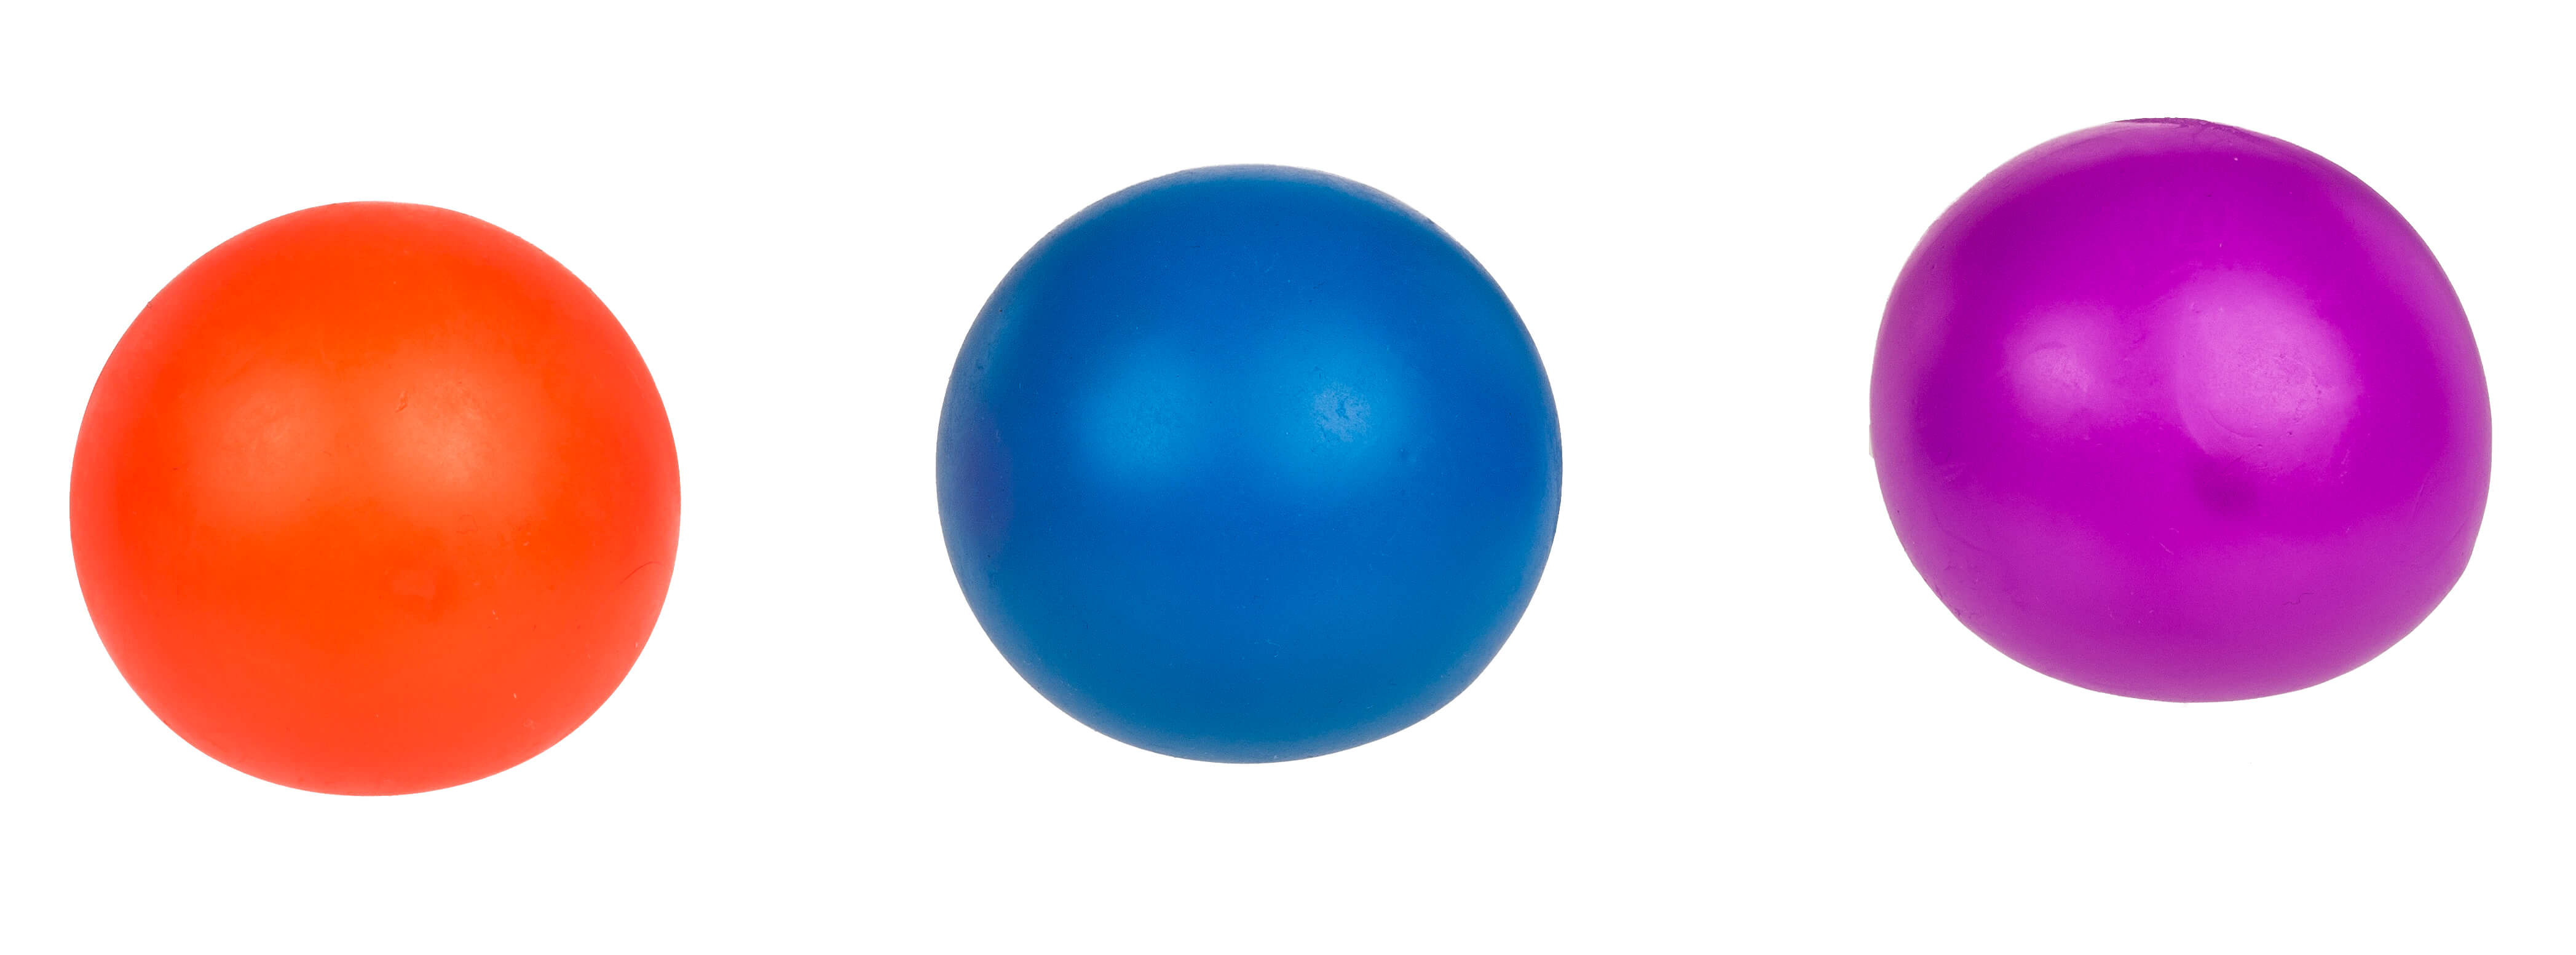 3-er Set Antistress-Ball  3.5cm